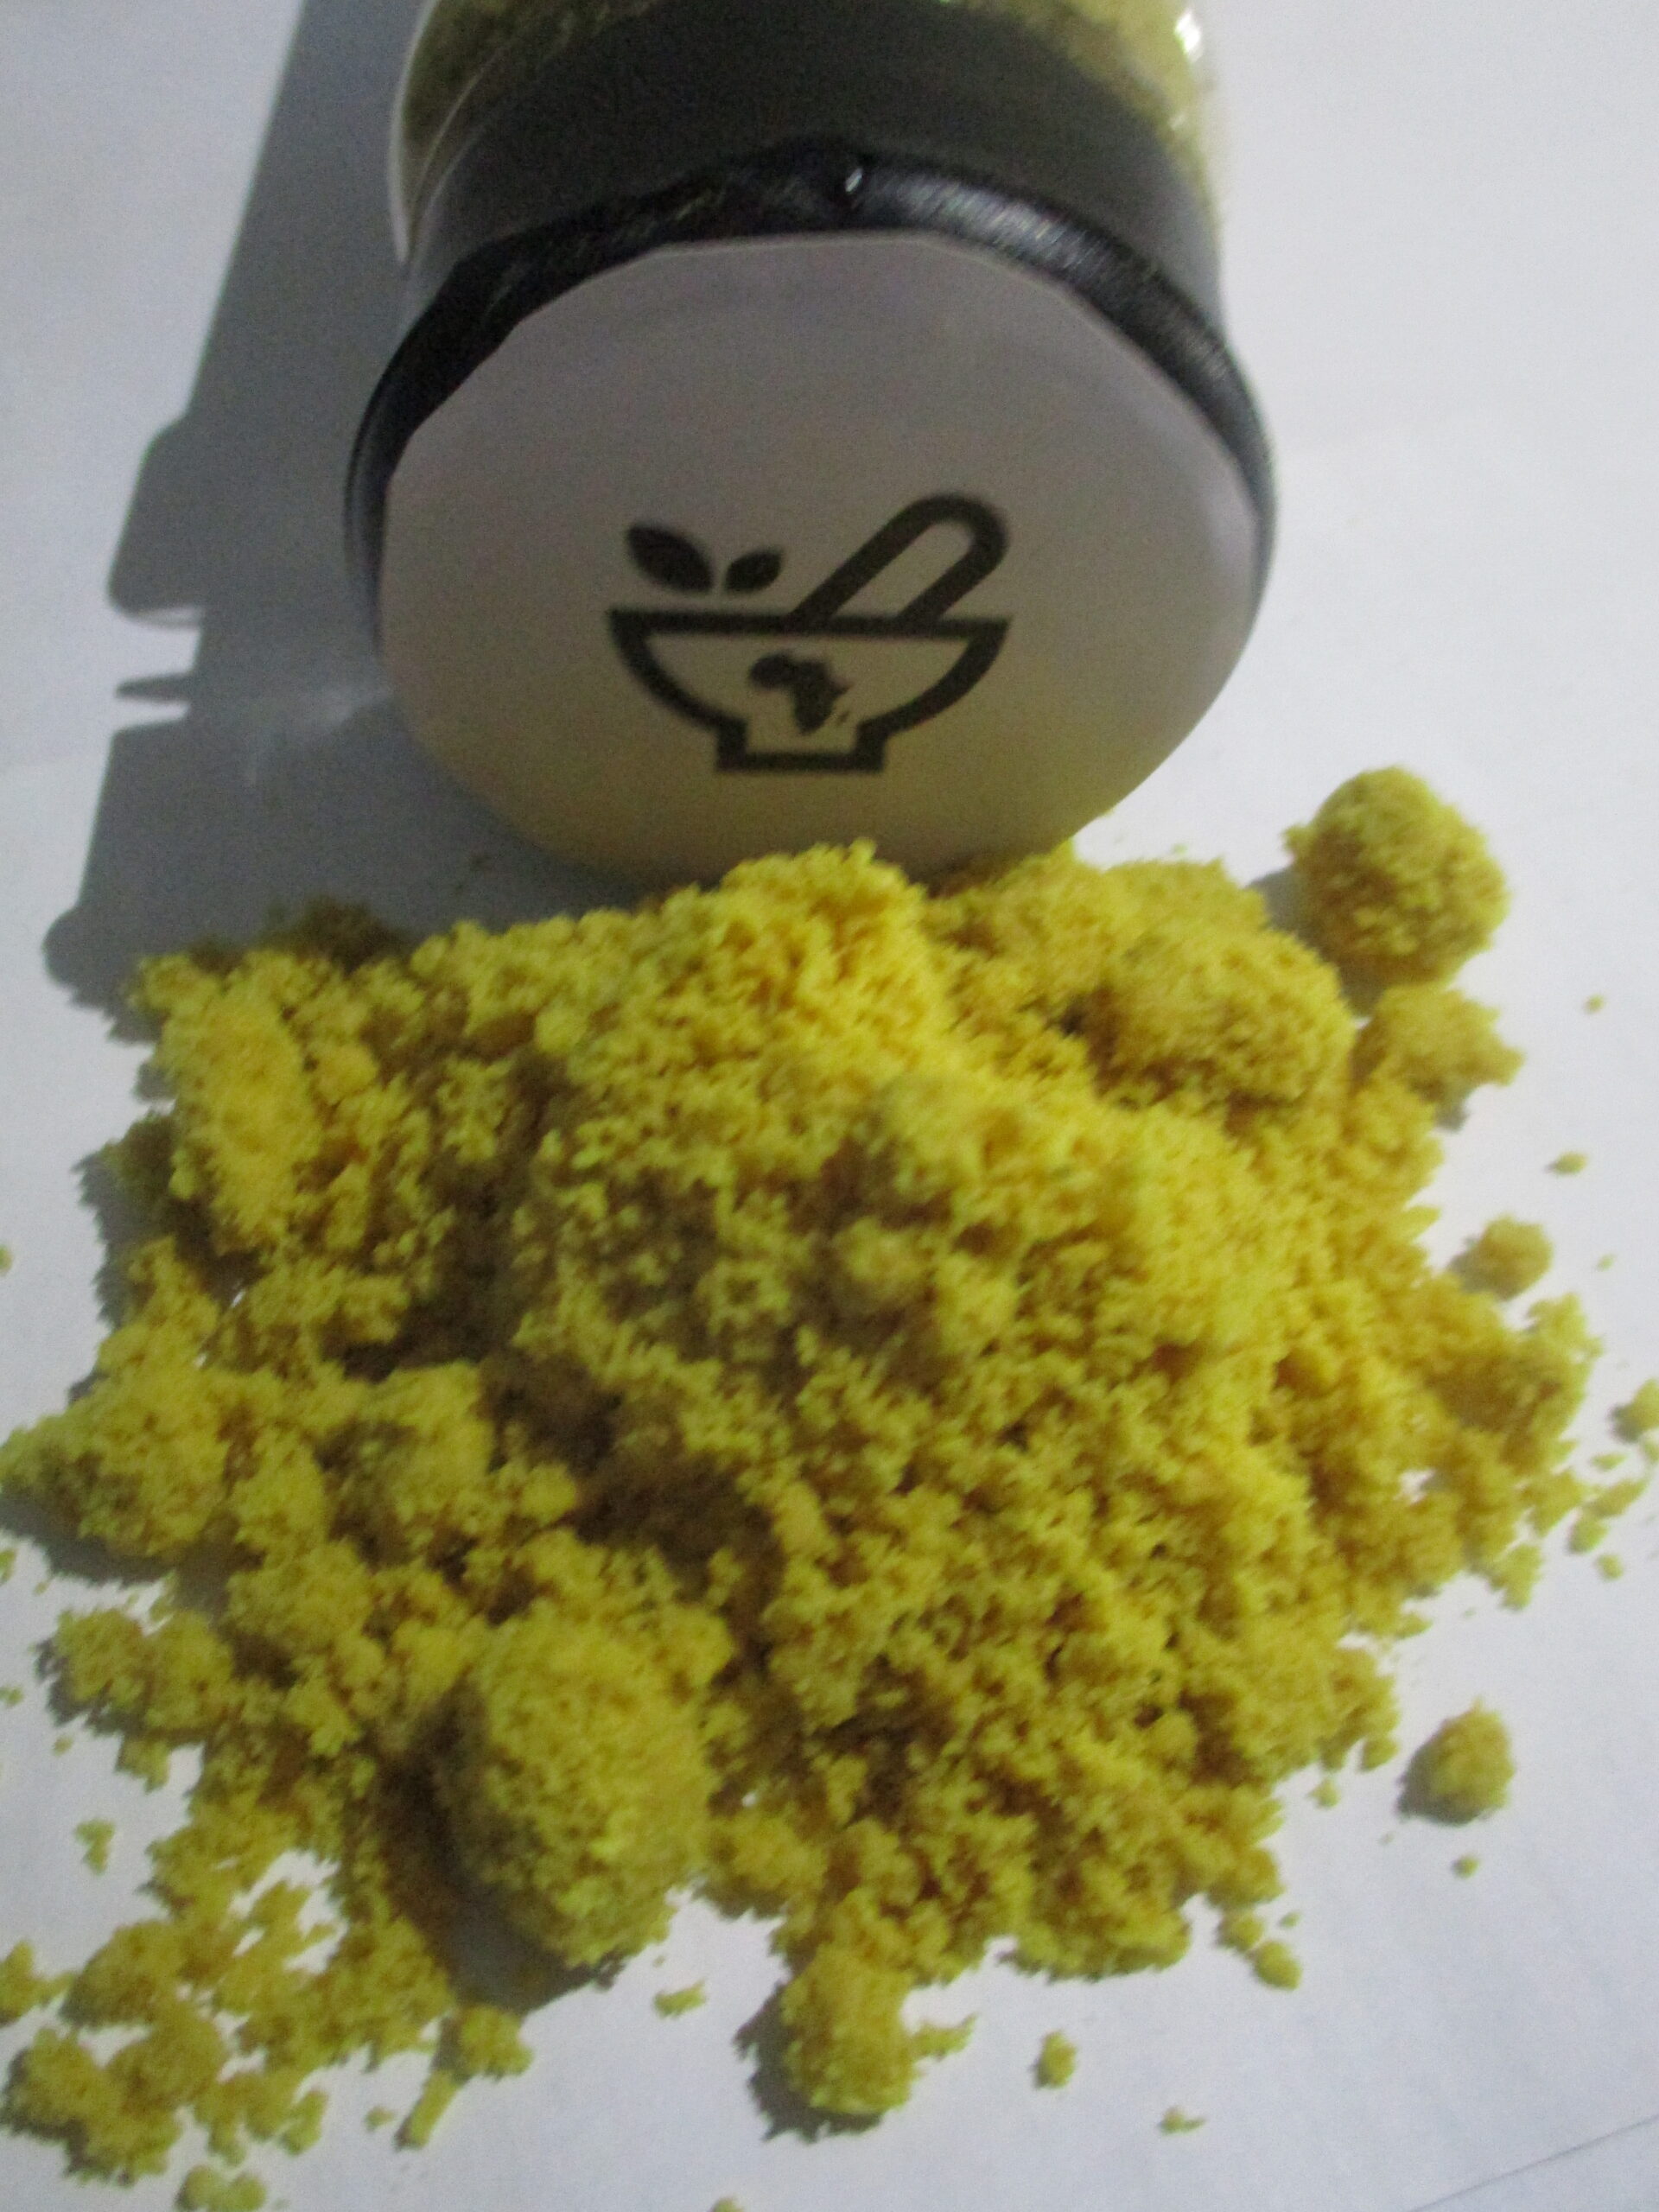 mustard powder